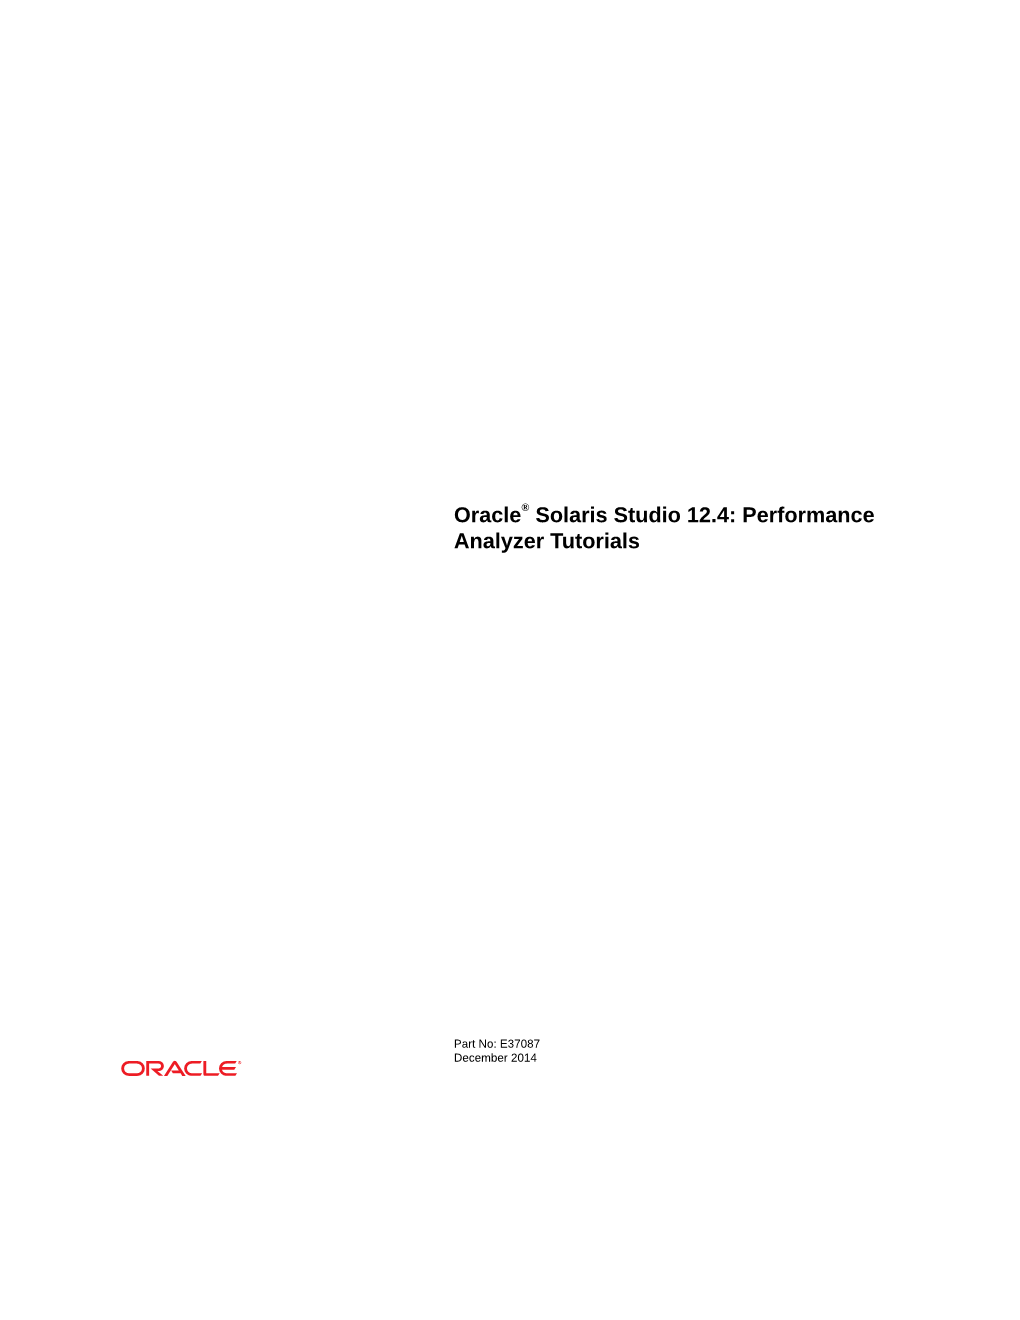 Oracle® Solaris Studio 12.4: Performance Analyzer Tutorials